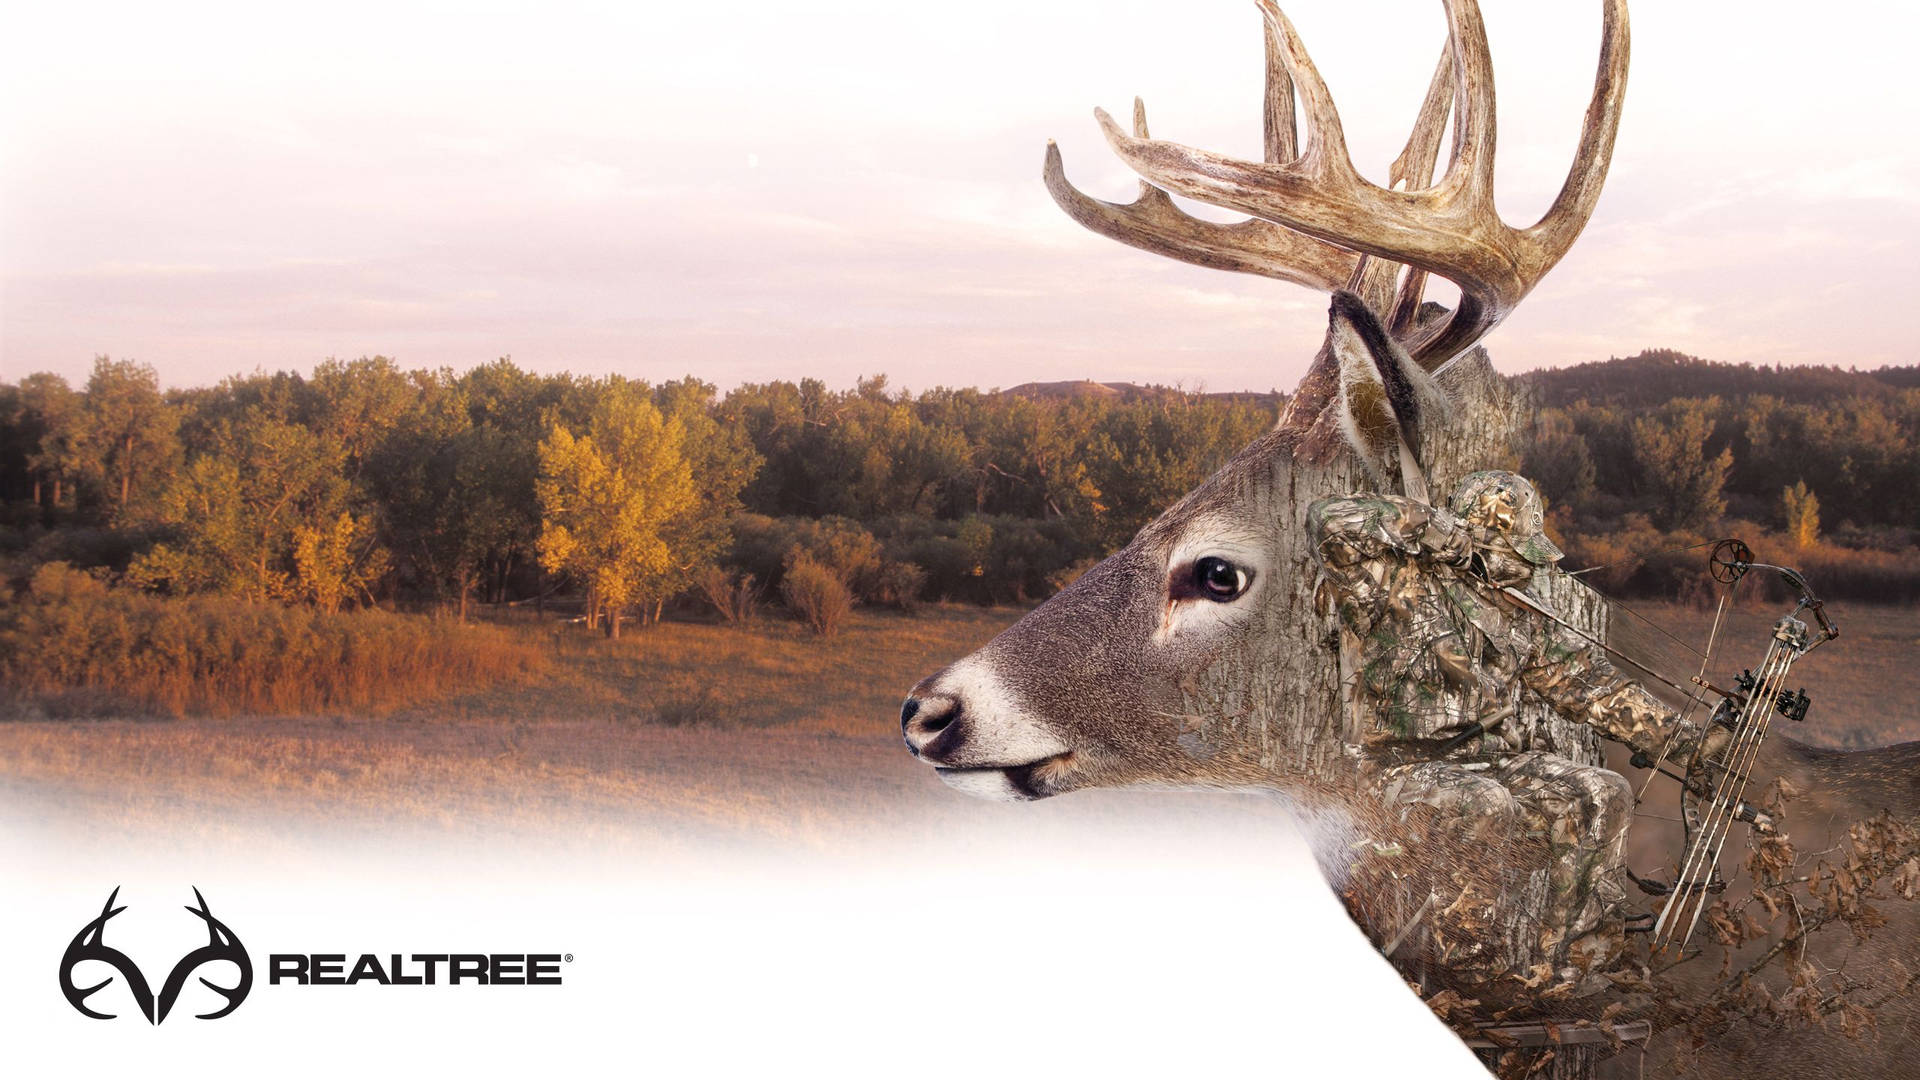 Deer Hunting Pictures  Download Free Images on Unsplash